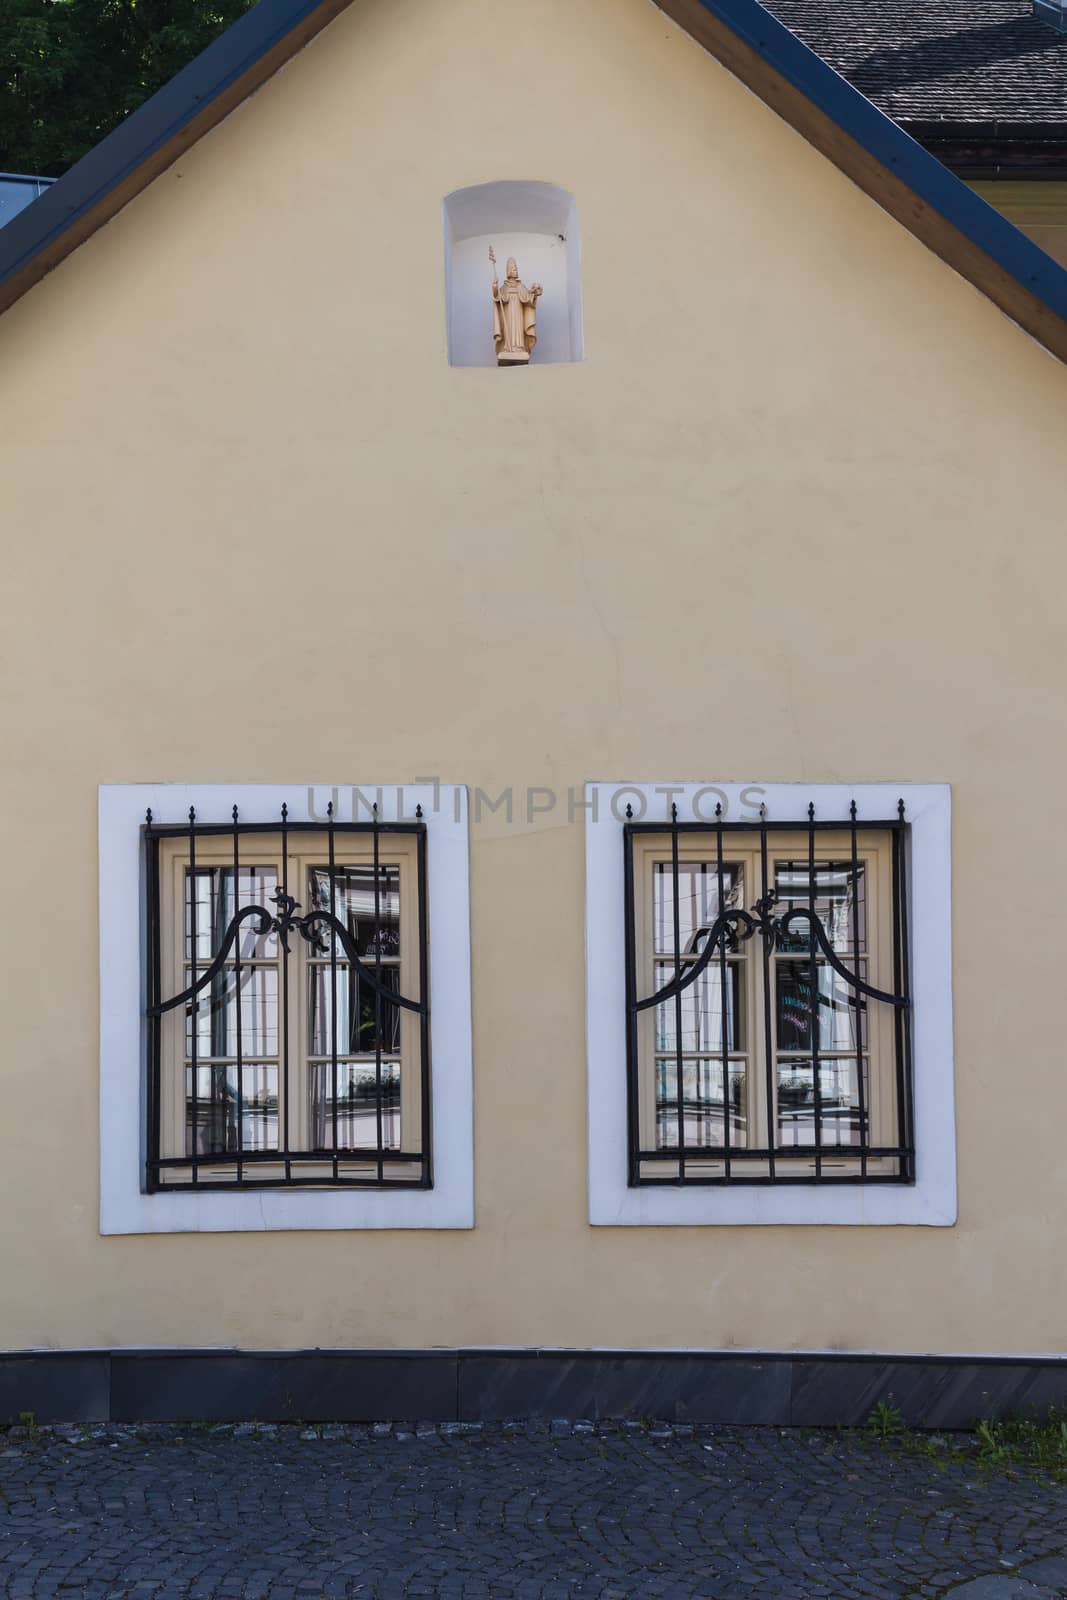 House with a saint statue, Banska Stiavnica, Slovakia by YassminPhoto